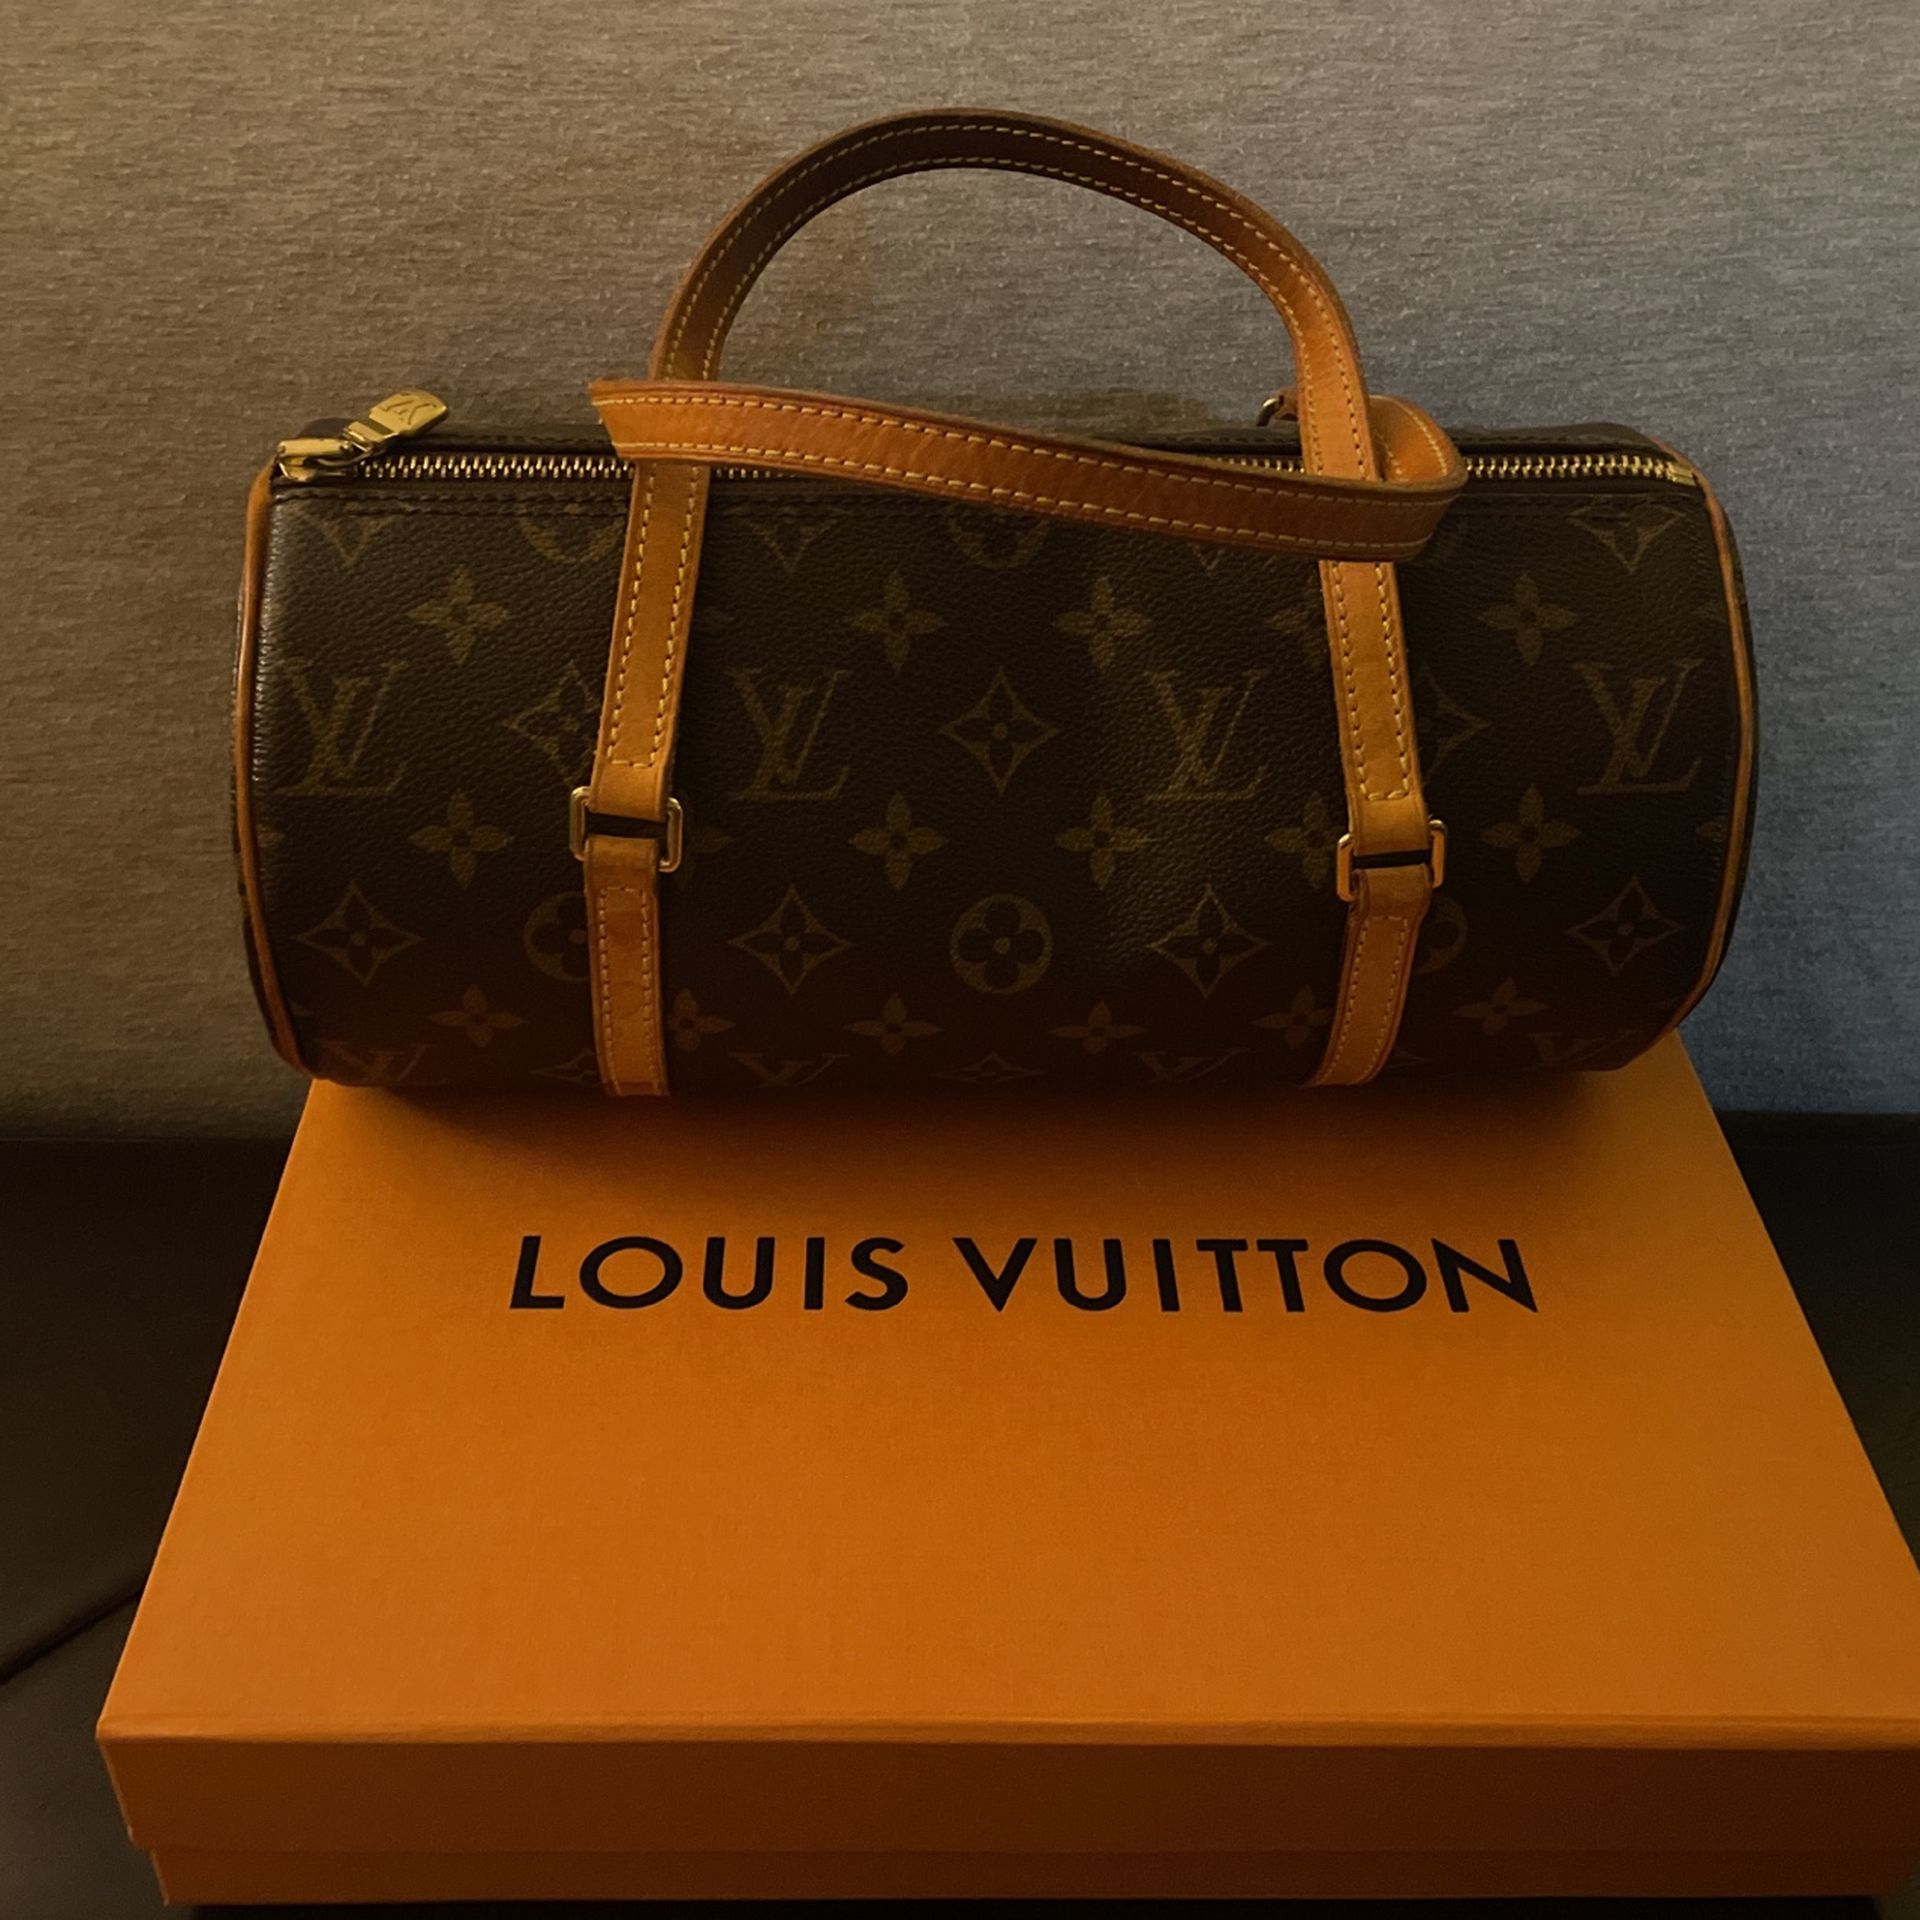 Authentic, Real Louis Vuitton